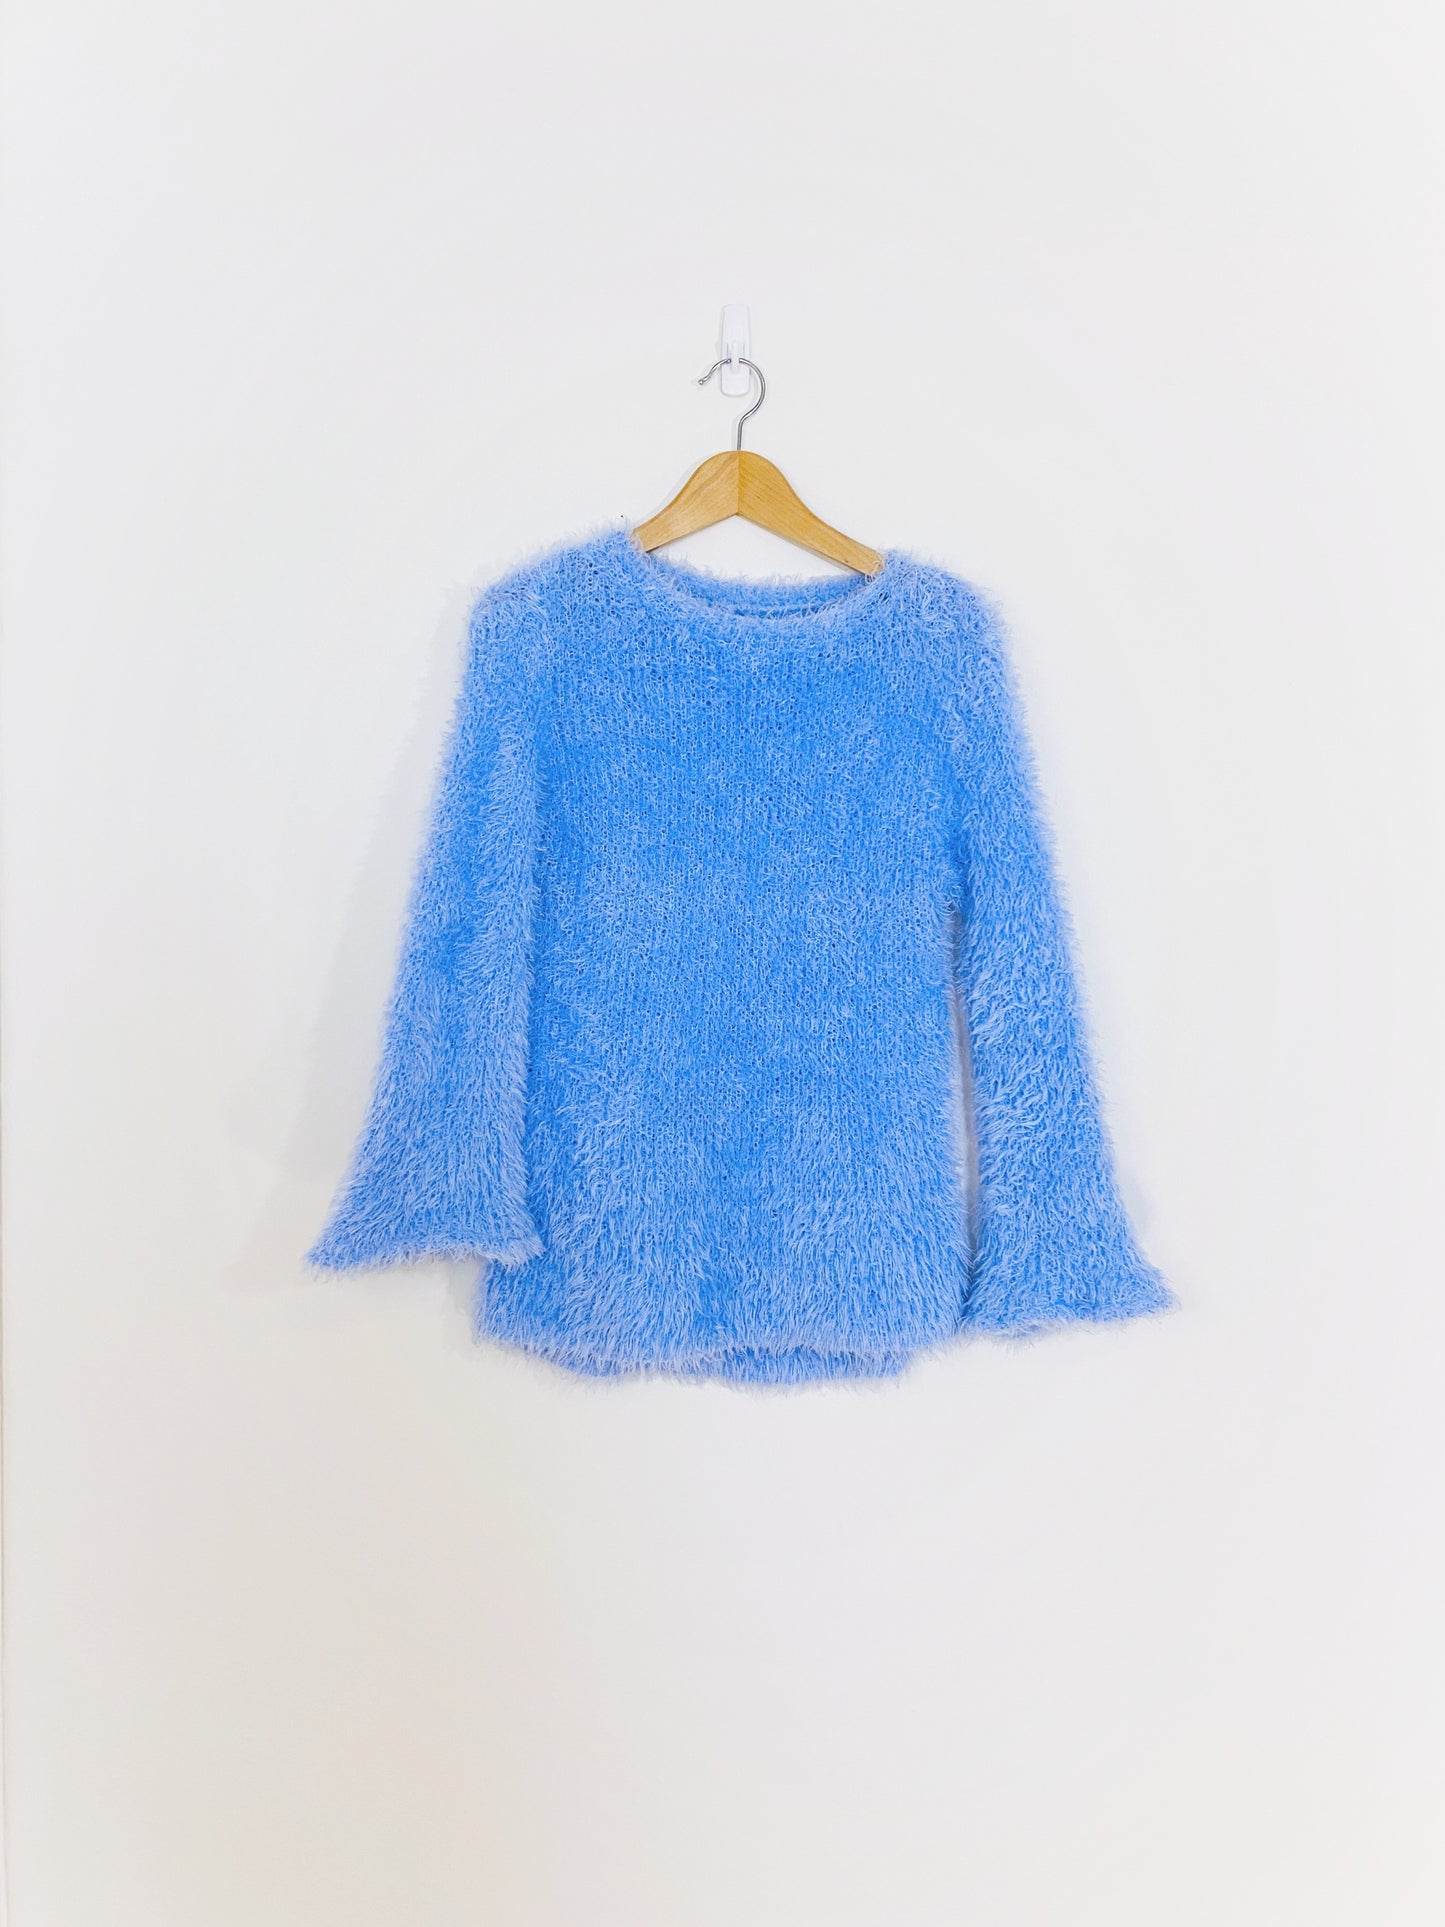 Blue Chenille Sweater (M/L)